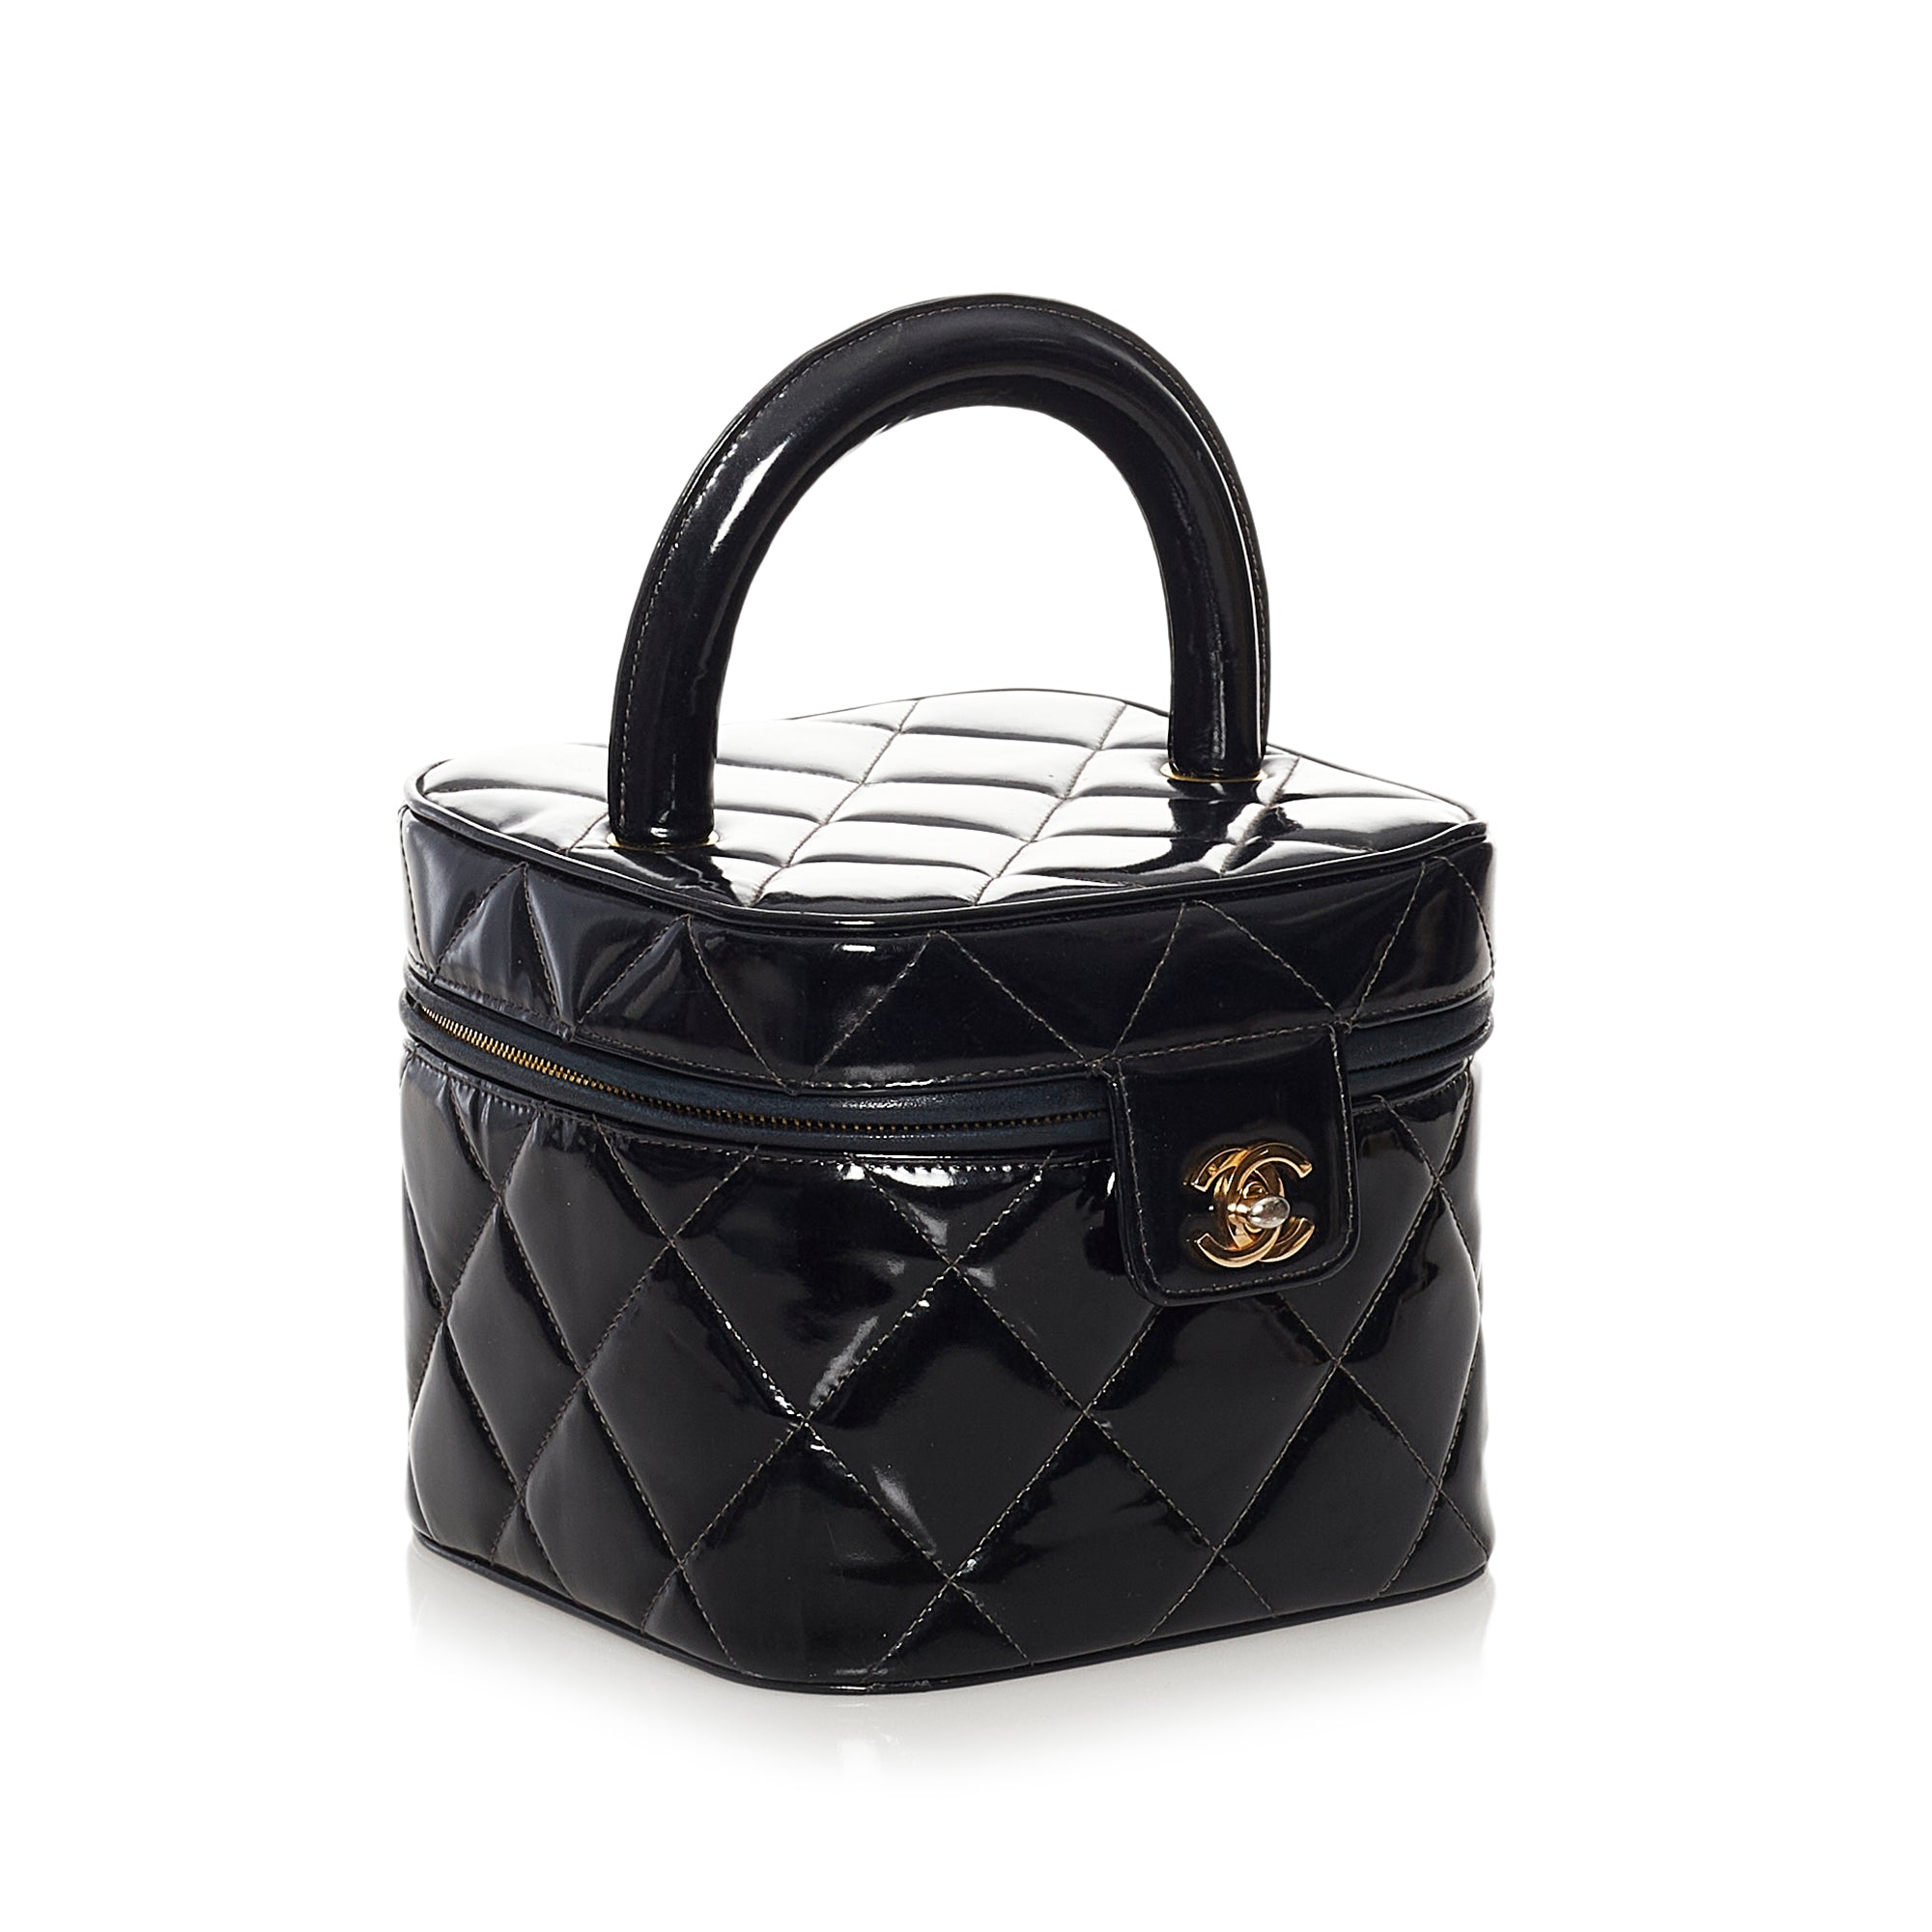 Chanel Chanel Vanity shoulder bag in patent matelassé leather